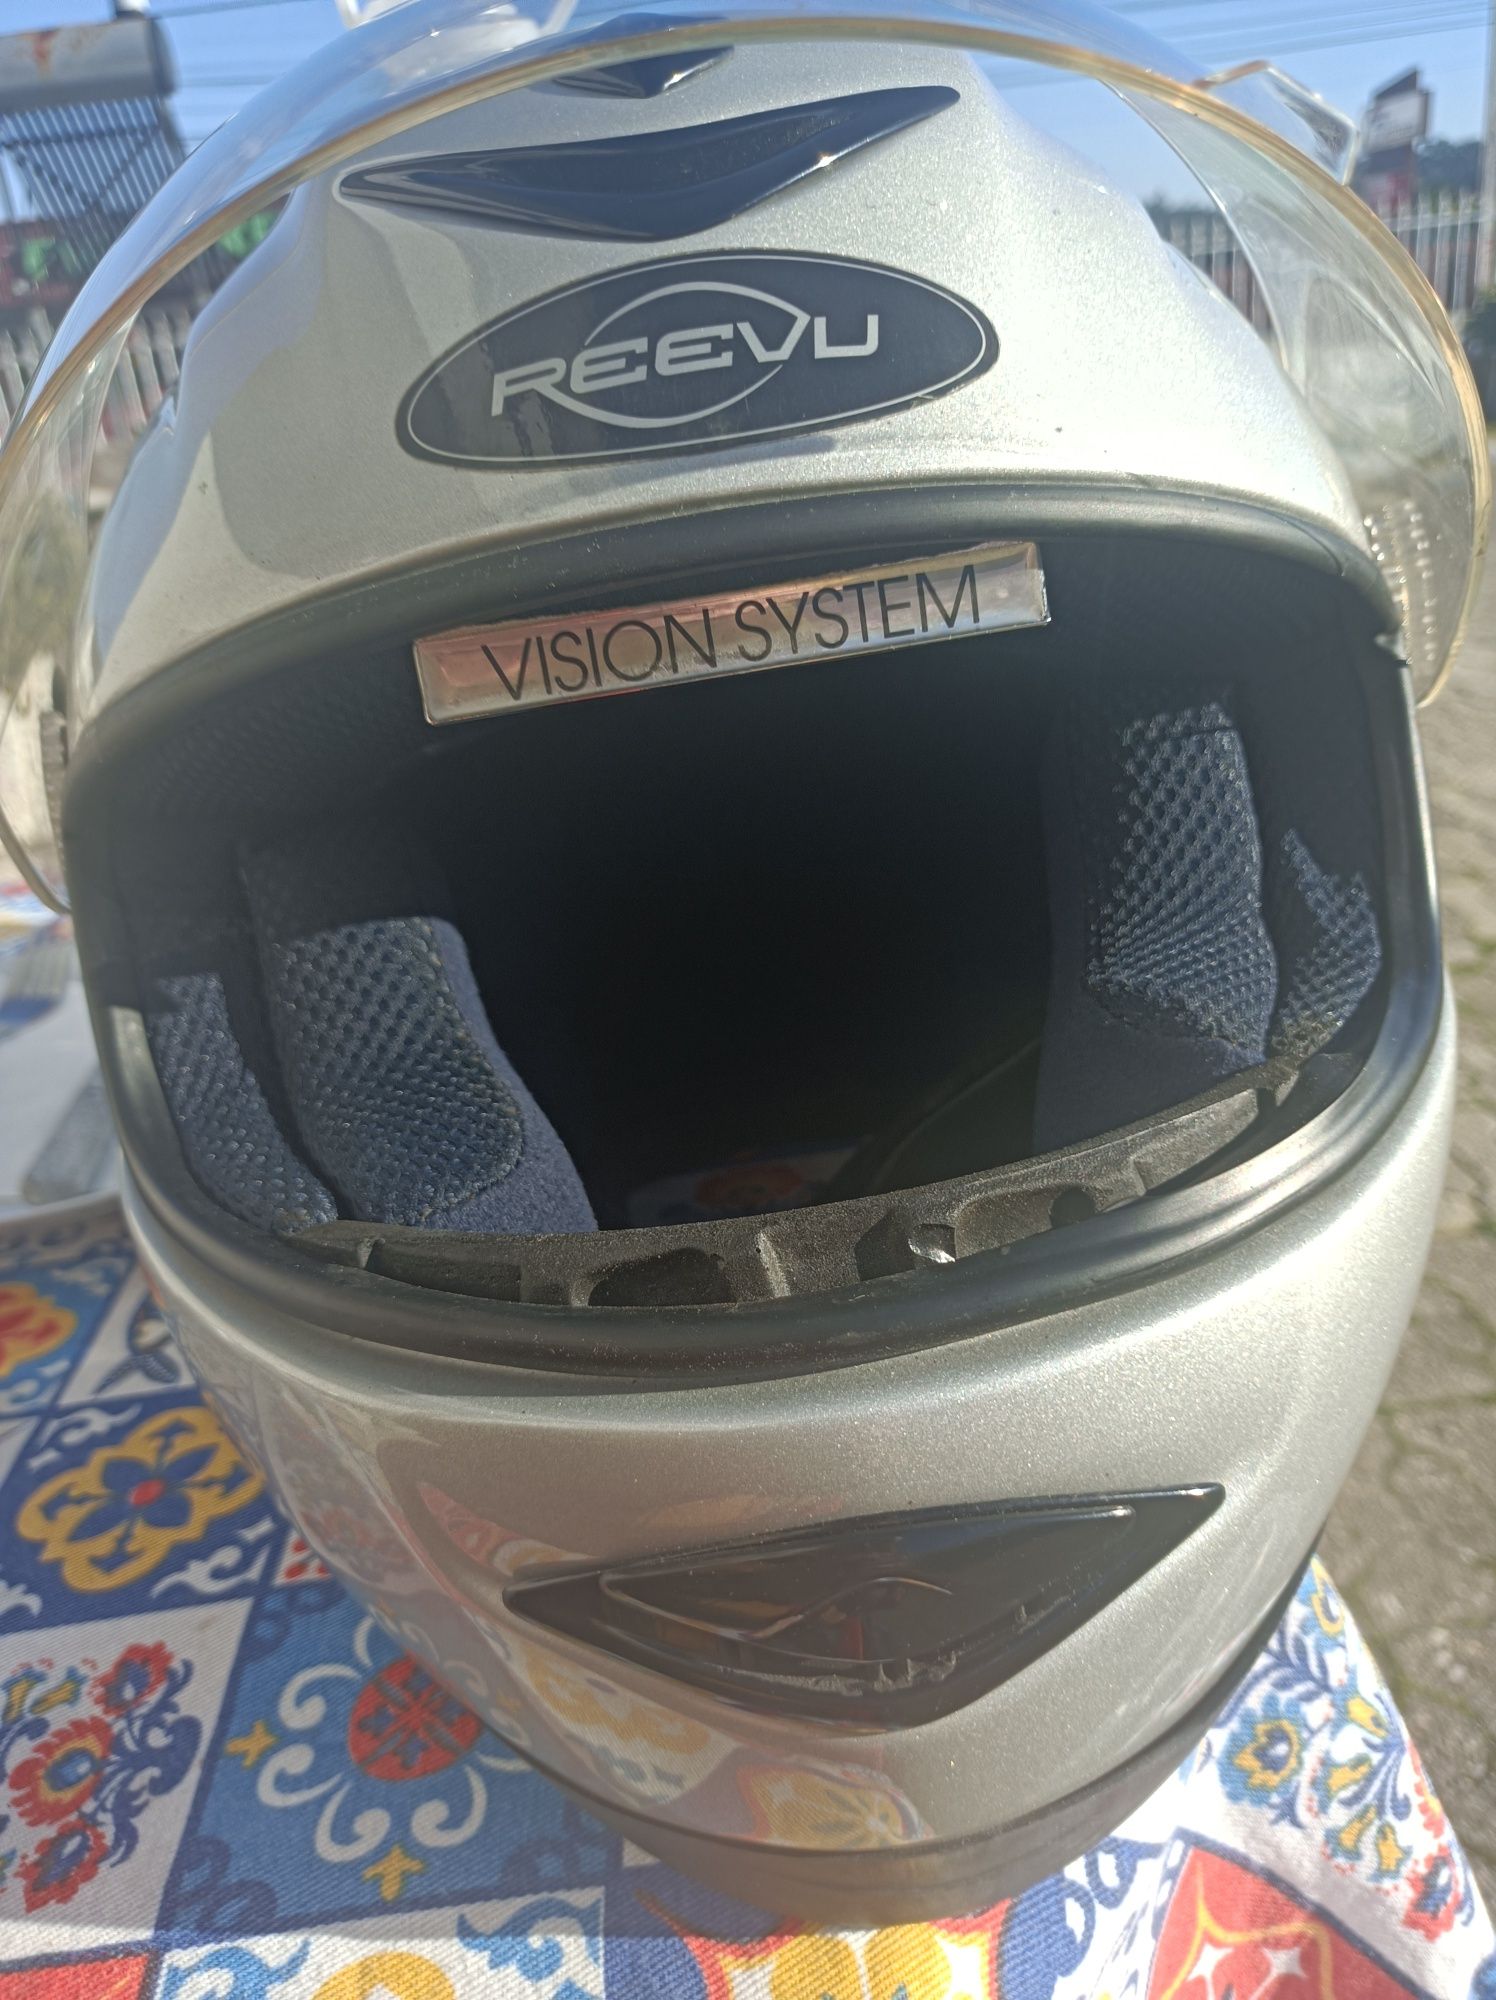 Vende-se 2 capacetes marca REEVU Vision System novos tamanhos XLe M